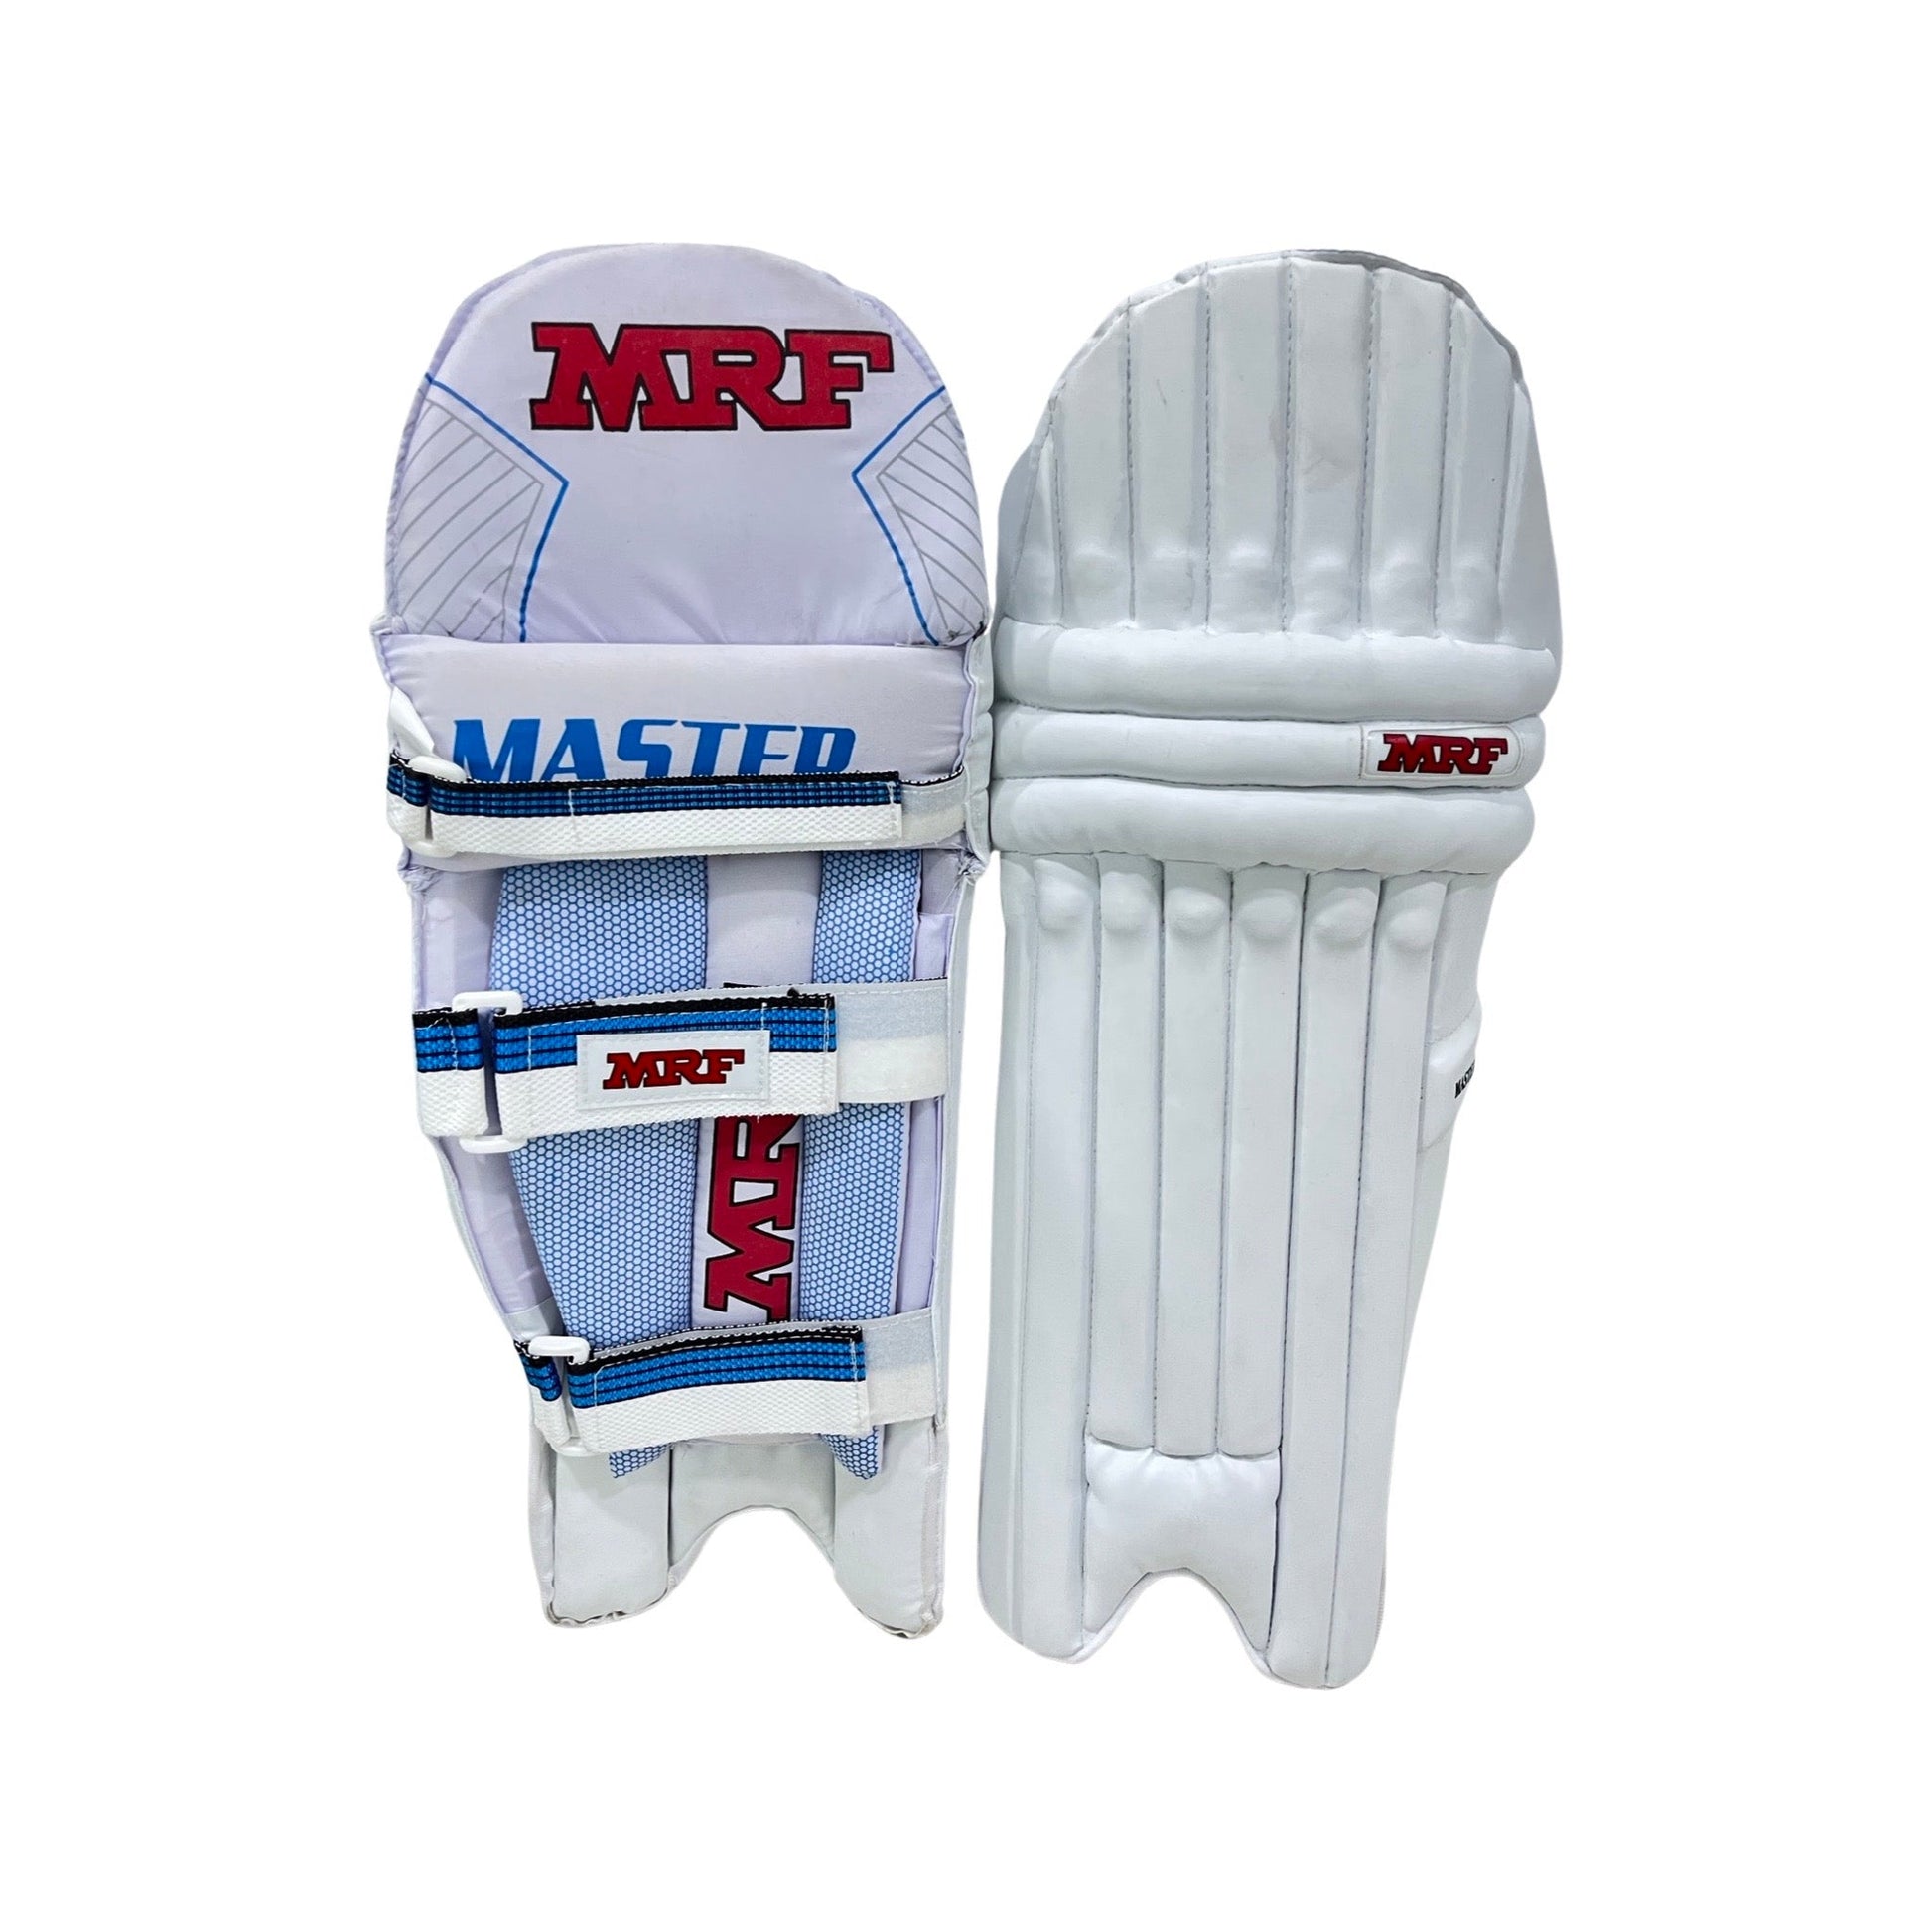 MRF Junior Kashmir Willow Cricket Kit Complete Set with Bat, Kit Bag, Gloves, Guards & Accessories